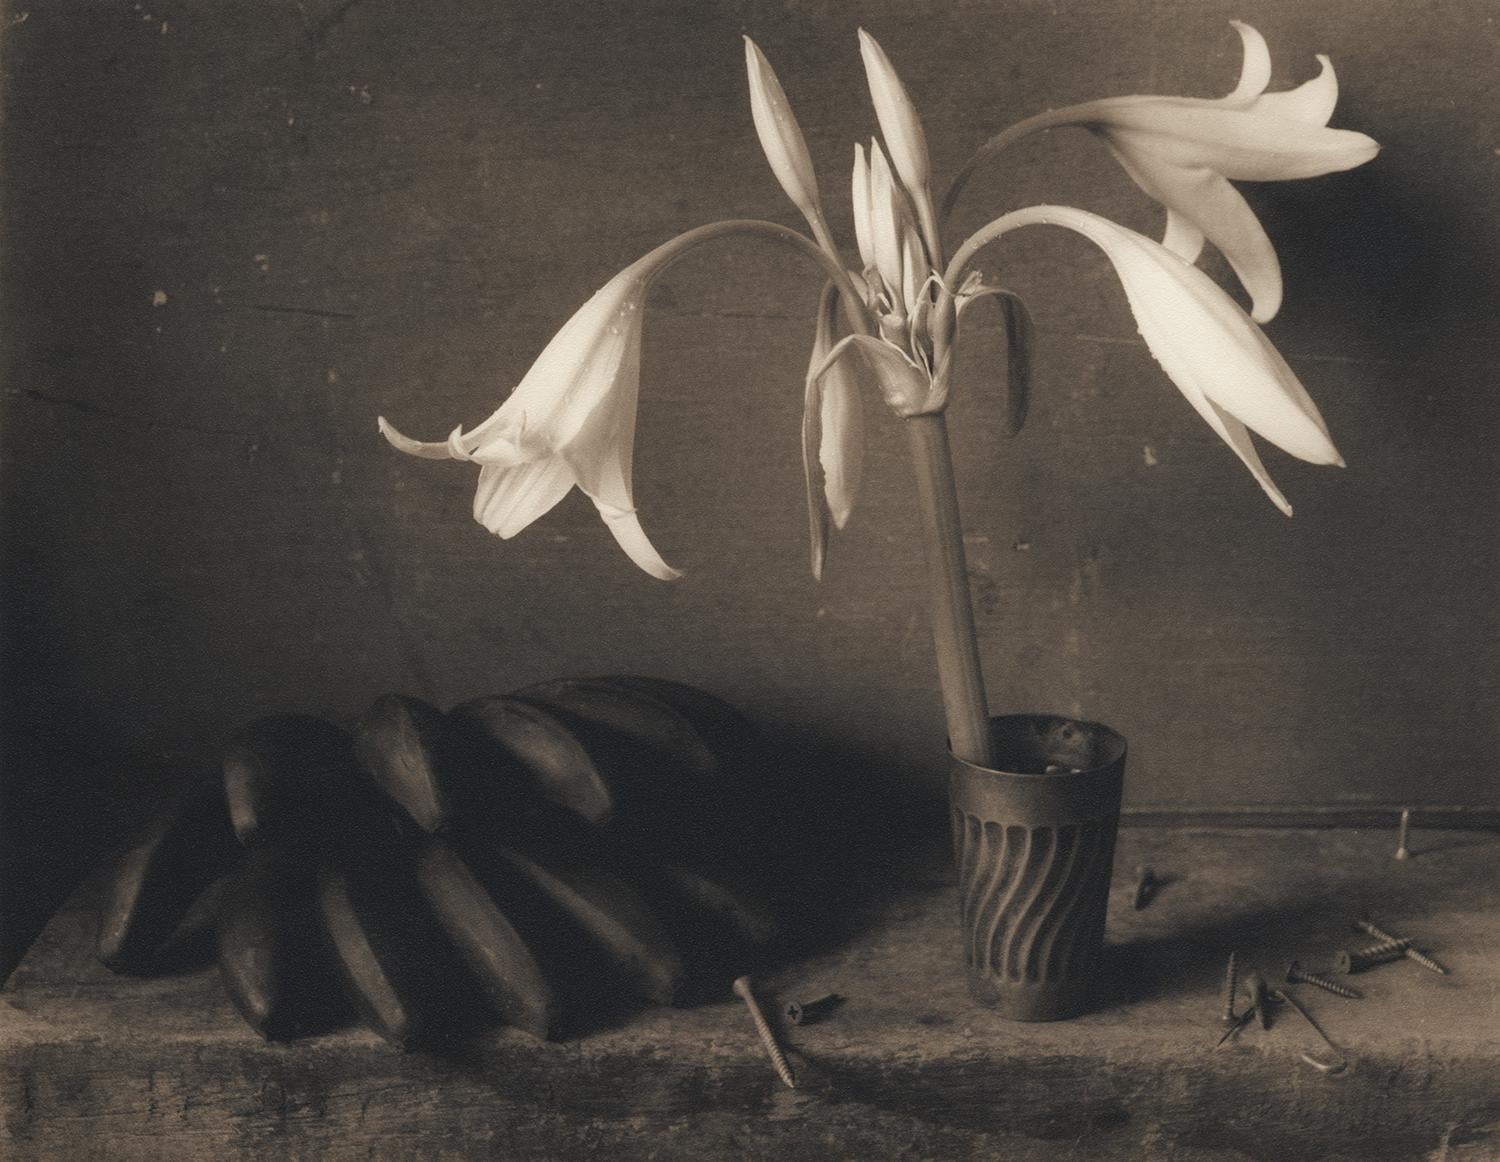 David Halliday Still-Life Photograph - Lilies & Plantains: Sepia Toned Still Life Photograph of Flowers and Fruit